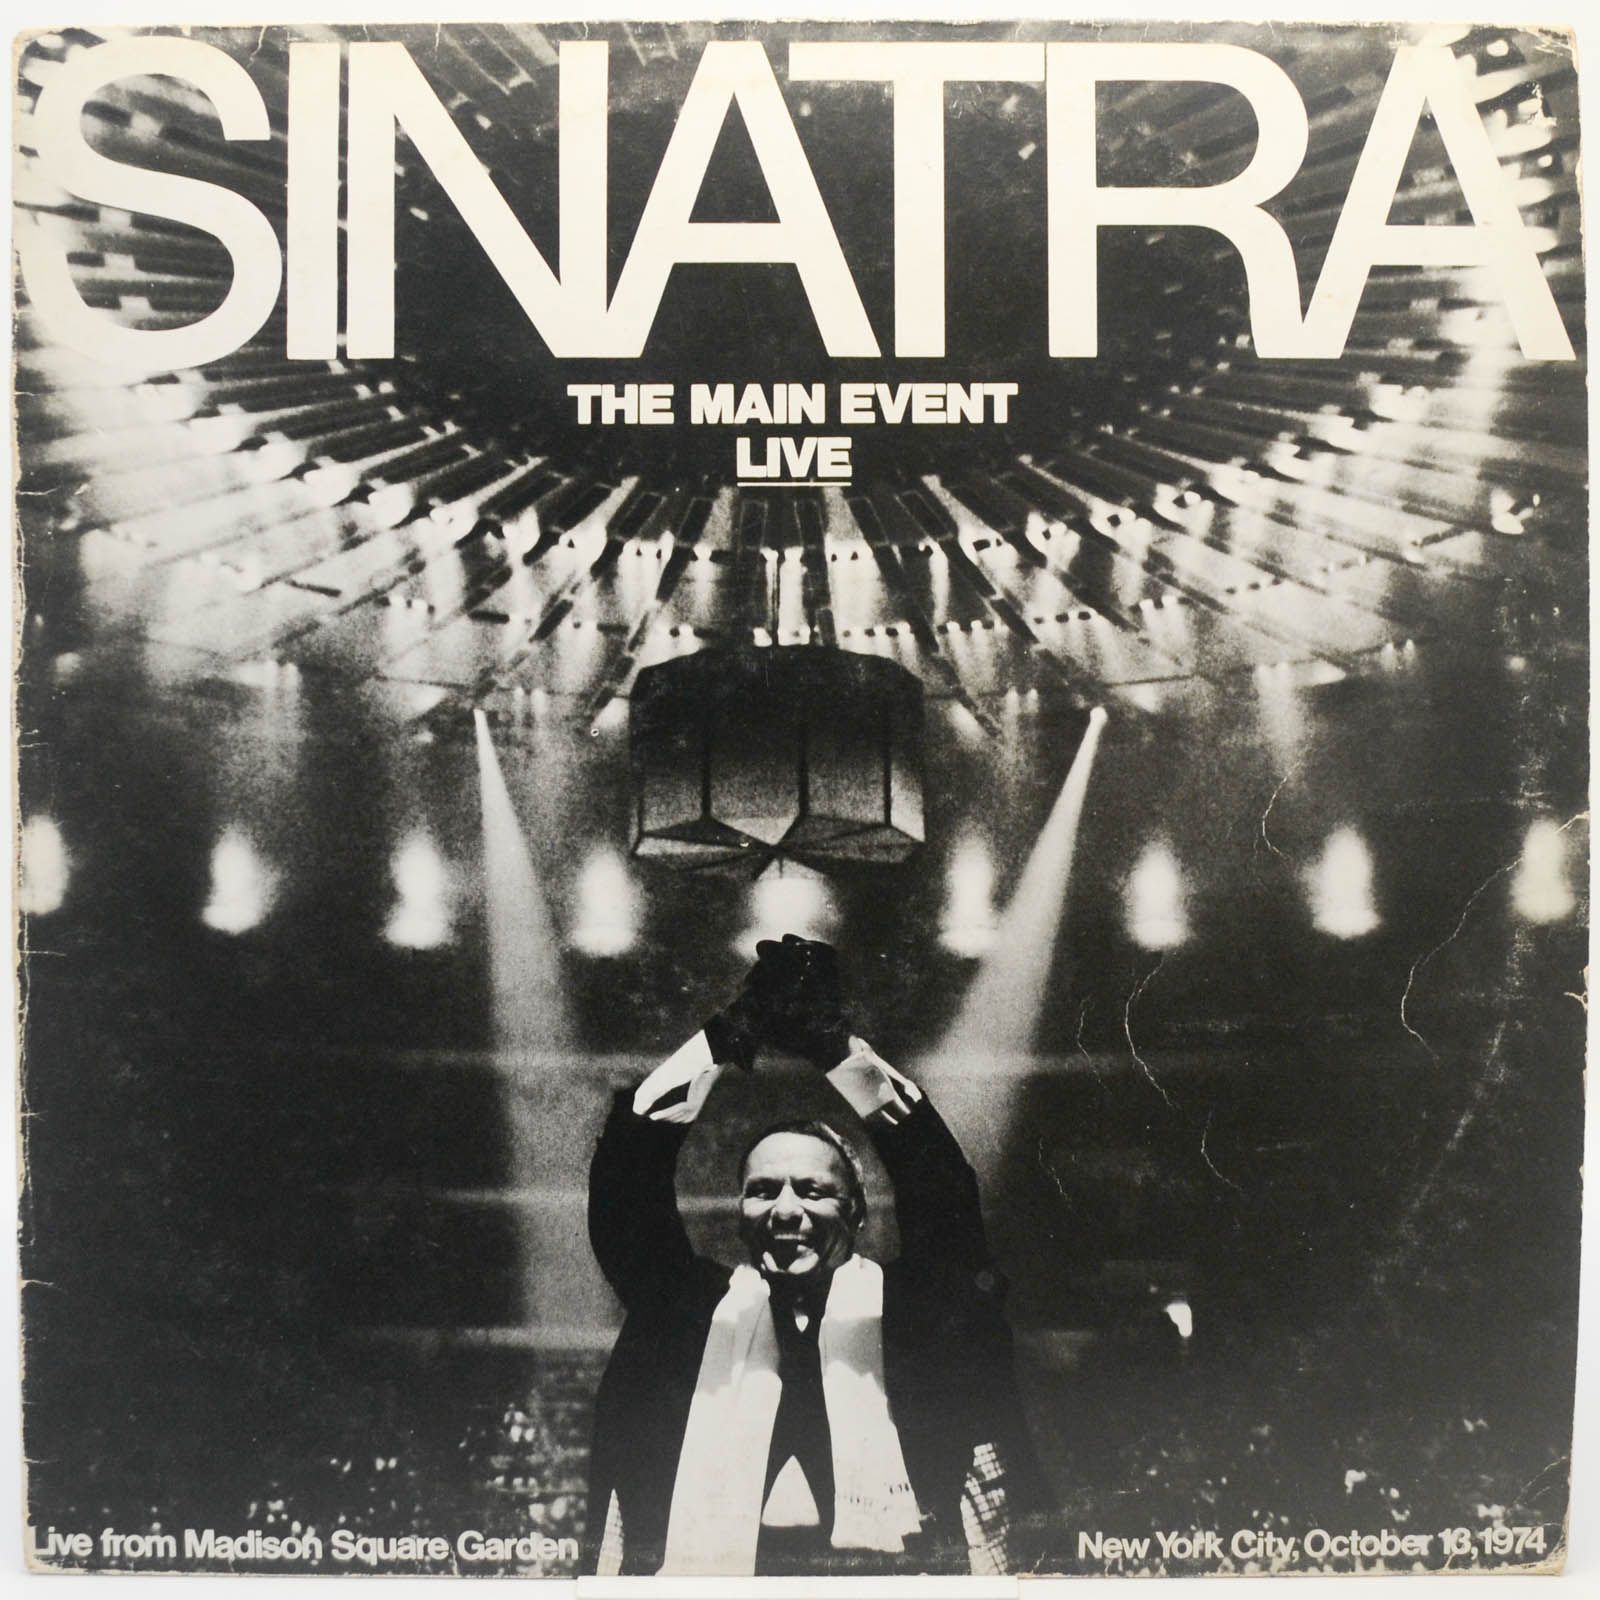 Frank Sinatra — The Main Event (Live) (UK), 1974